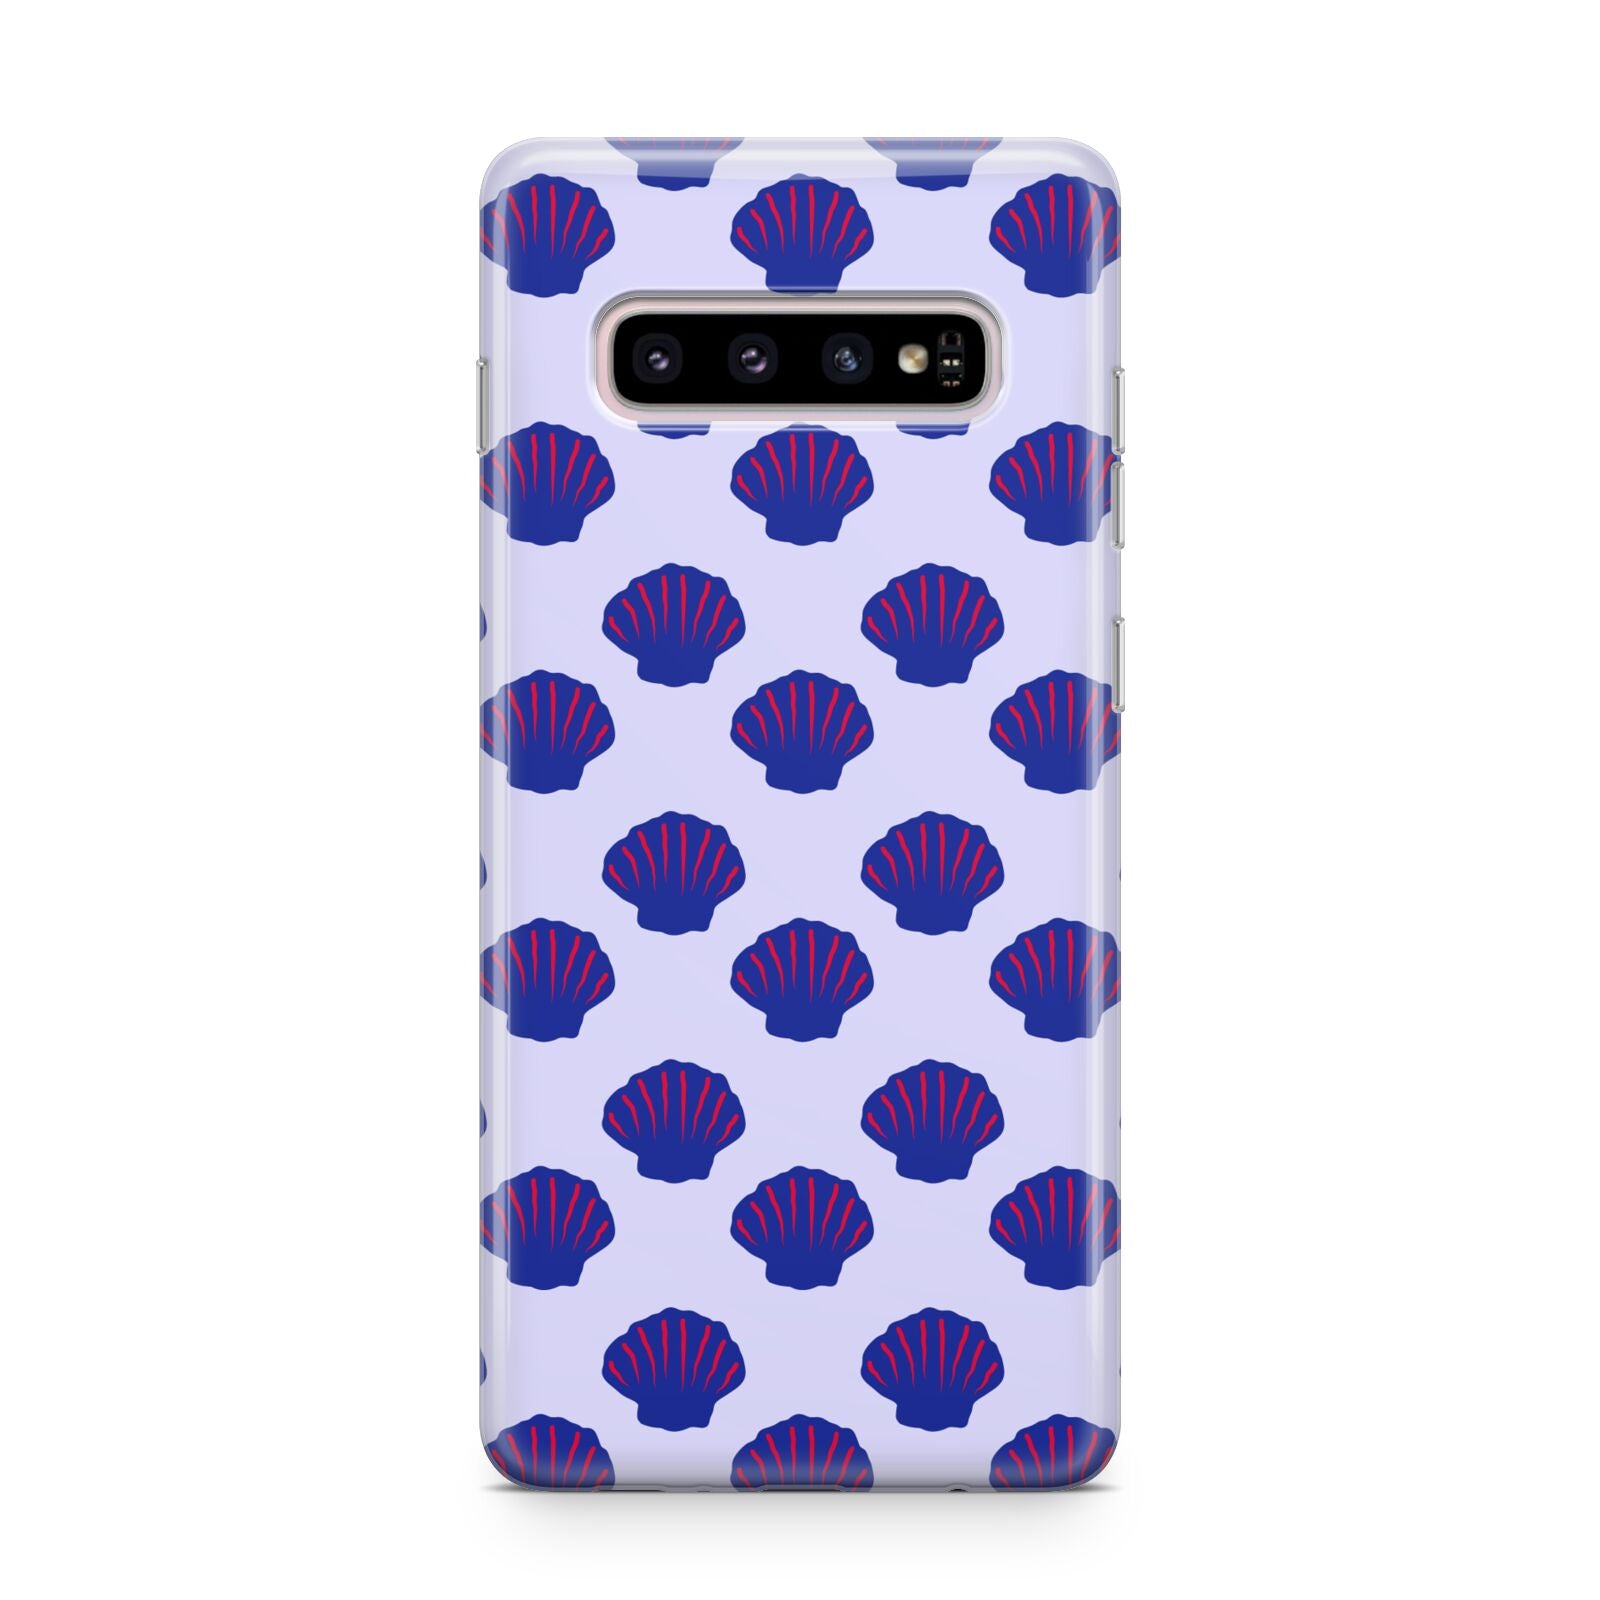 Shell Pattern Samsung Galaxy S10 Plus Case